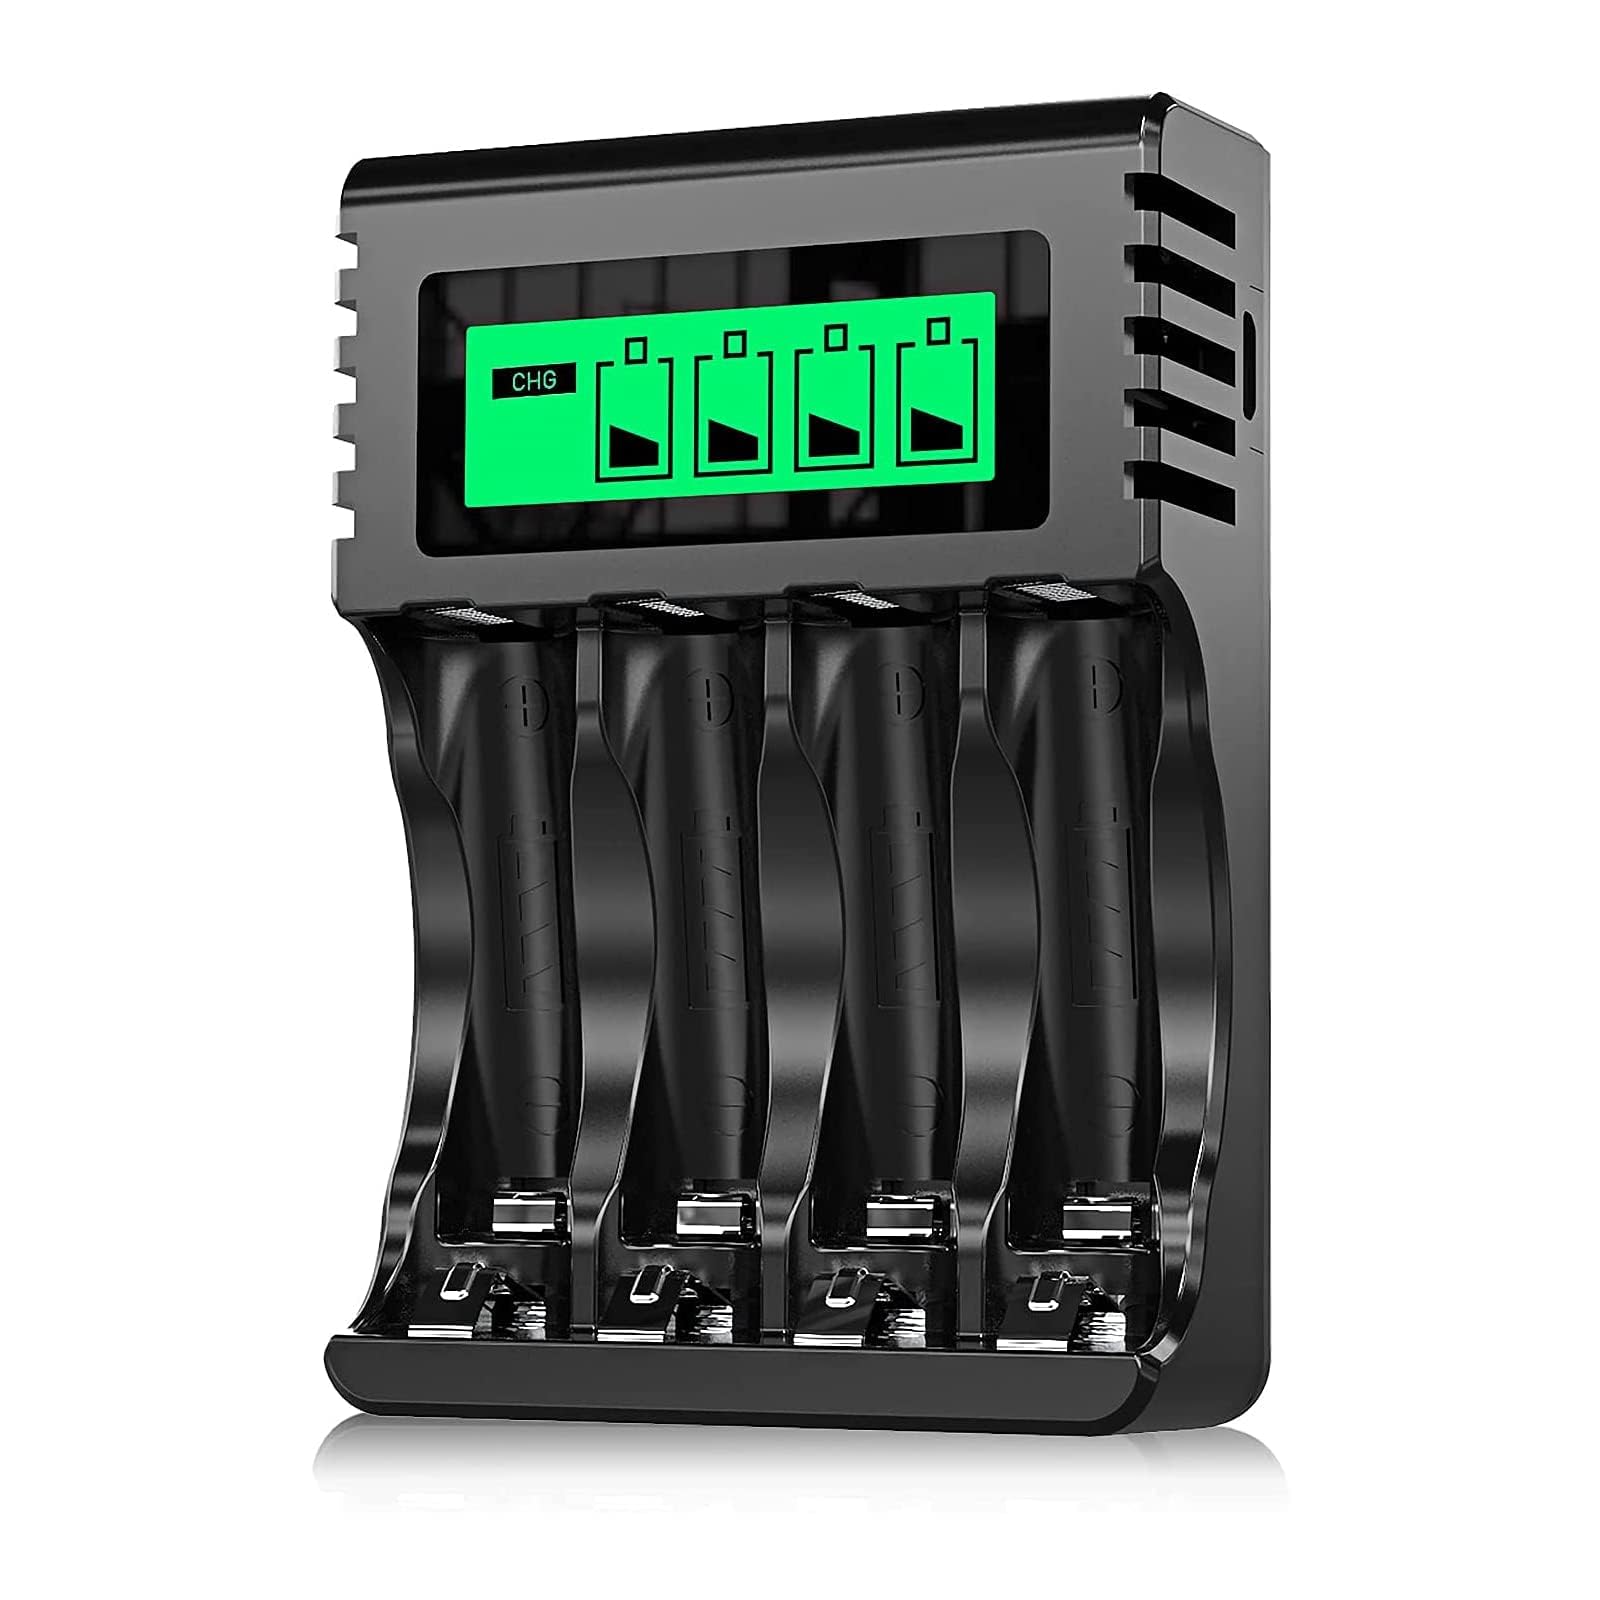 Achat POWEROWL 4 Slots Chargeur Piles Rechargeable Charge Rapide pour AA AAA Rechargeable avec Port USB sfvN530dp Haute Quaity